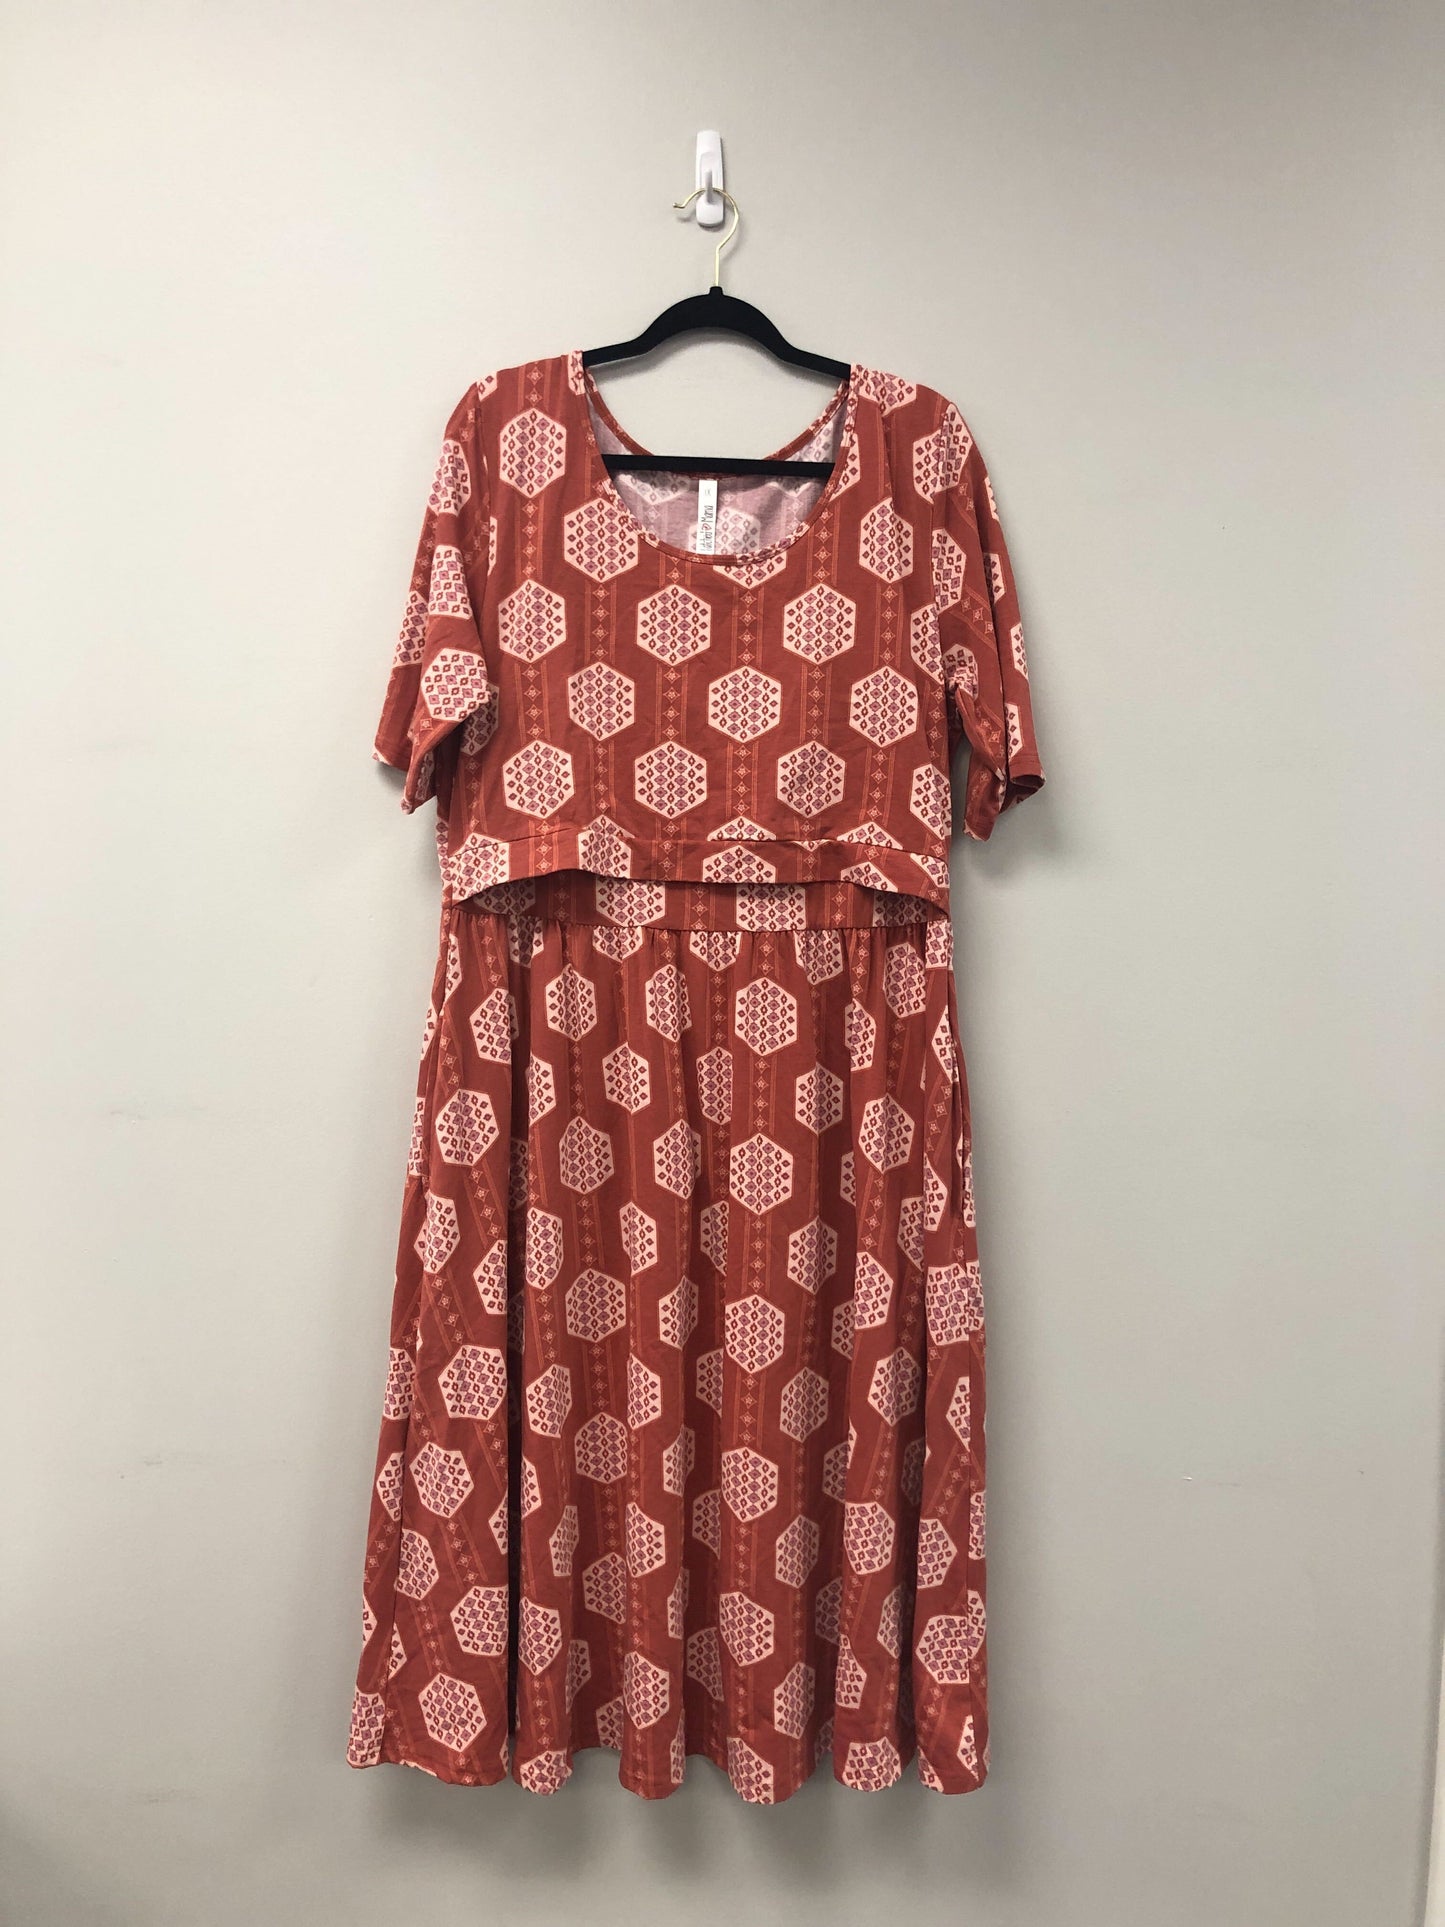 Outlet 5568 - Latched Mama Classic Cotton Nursing Dress - Potter's Glaze - 1X